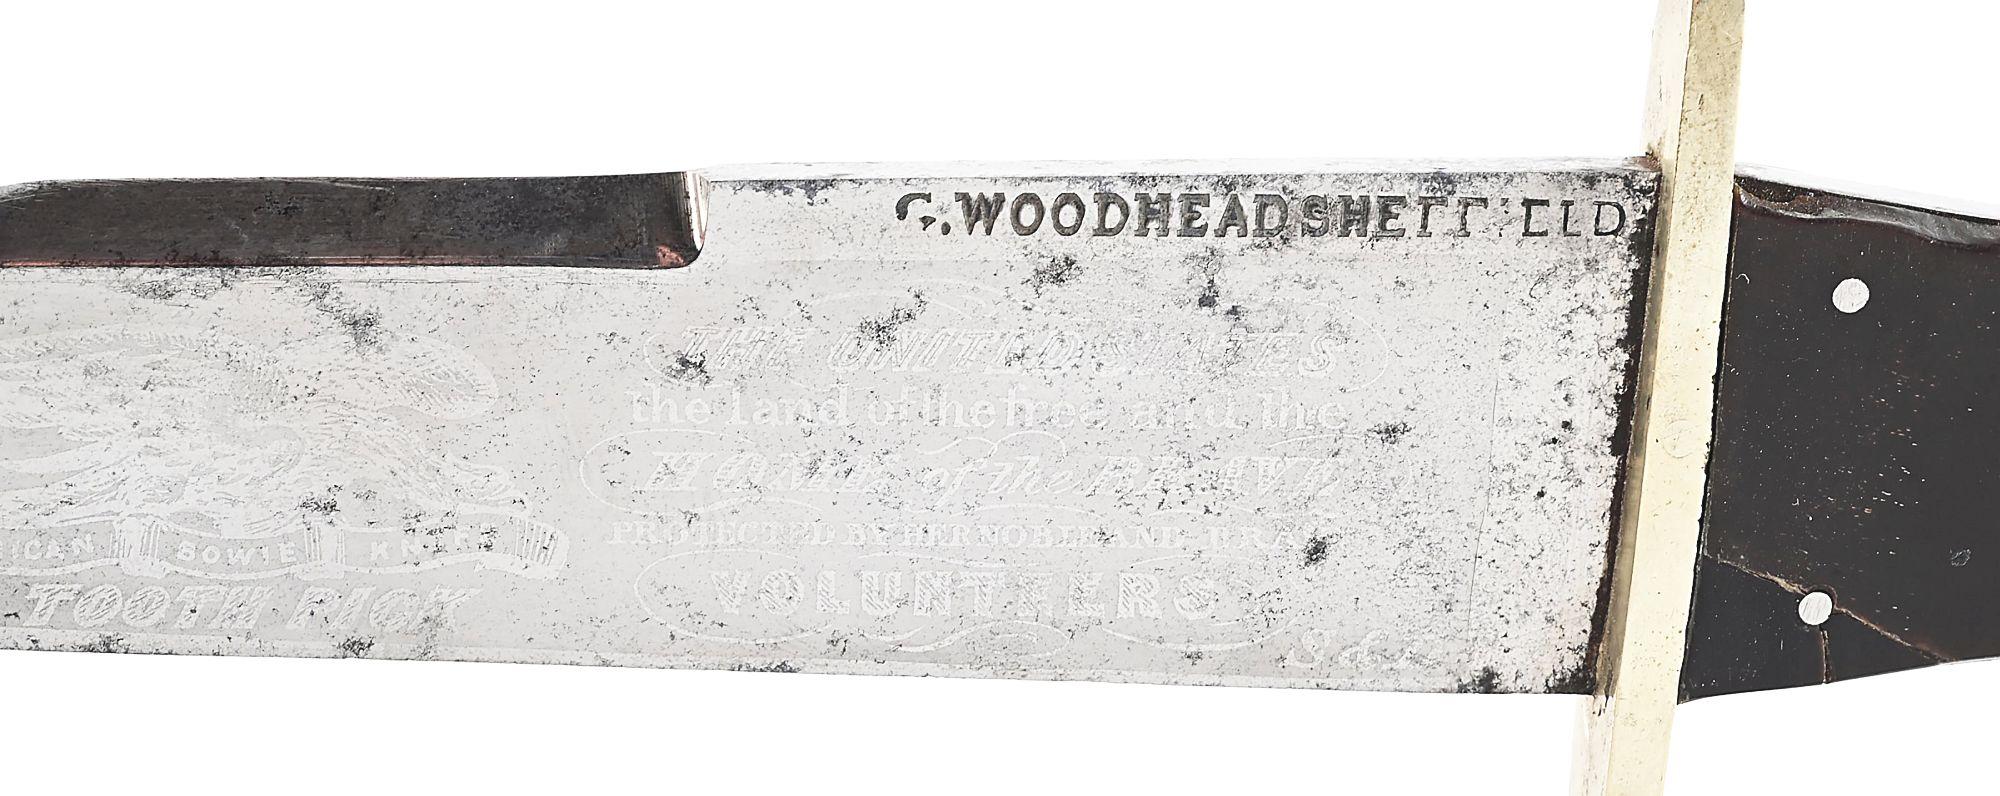 GEORGE WOODHEAD SHEFFIELD BOWIE KNIFE WITH PATRIOTIC ACID ETCHING.